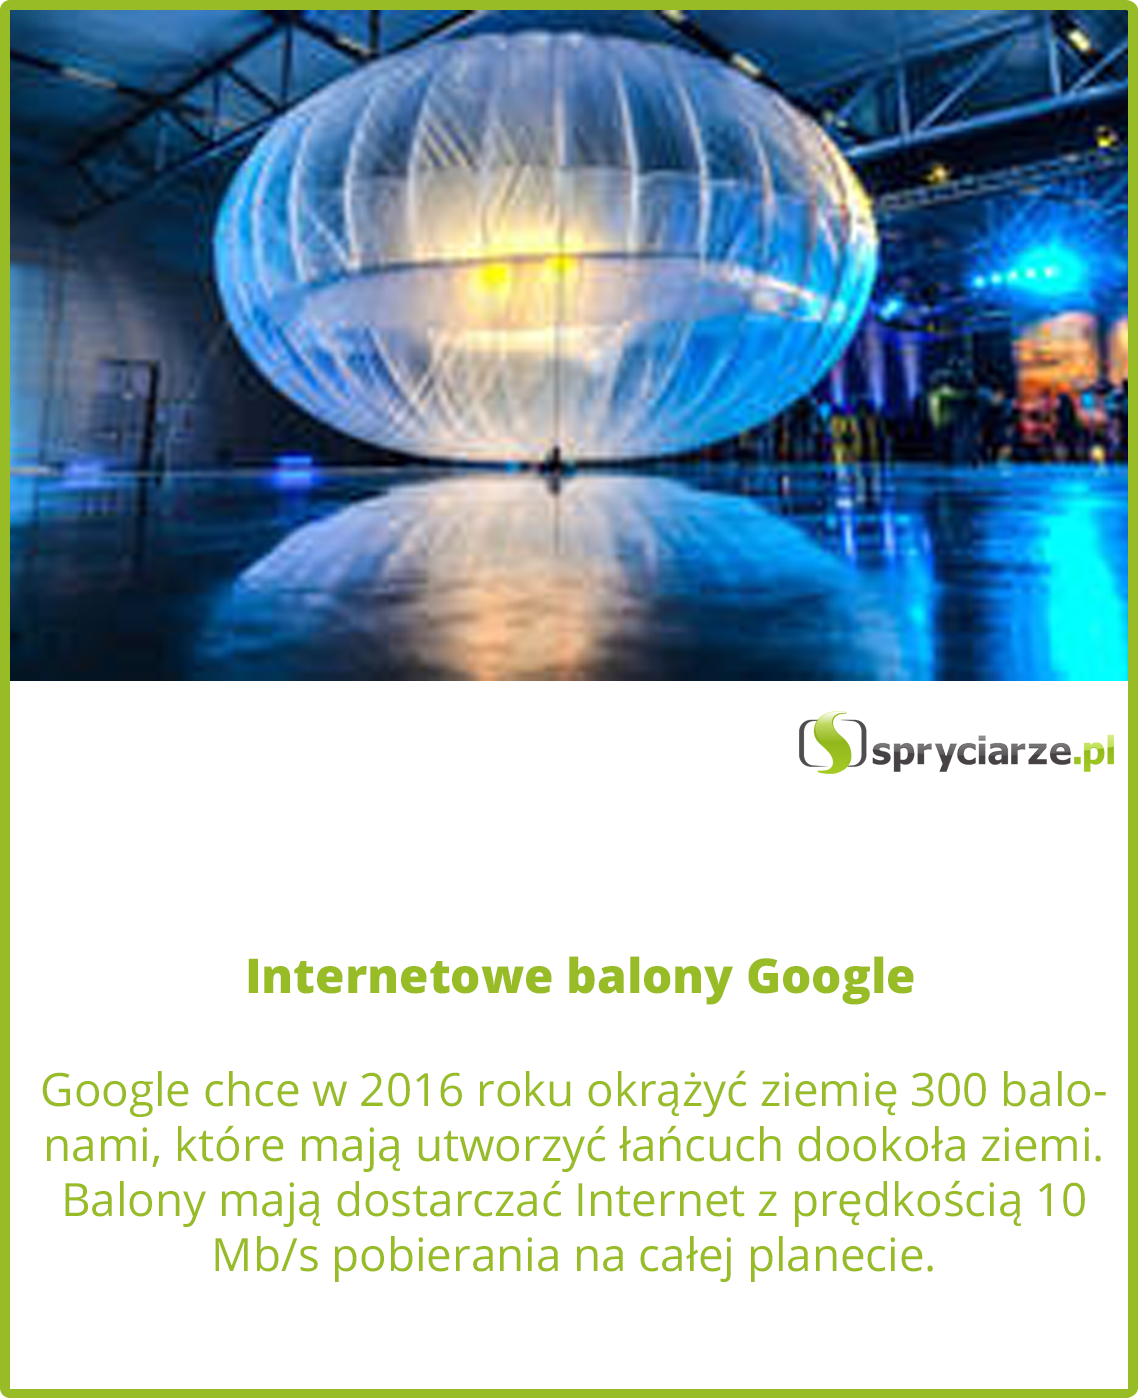  Internetowe balony Google